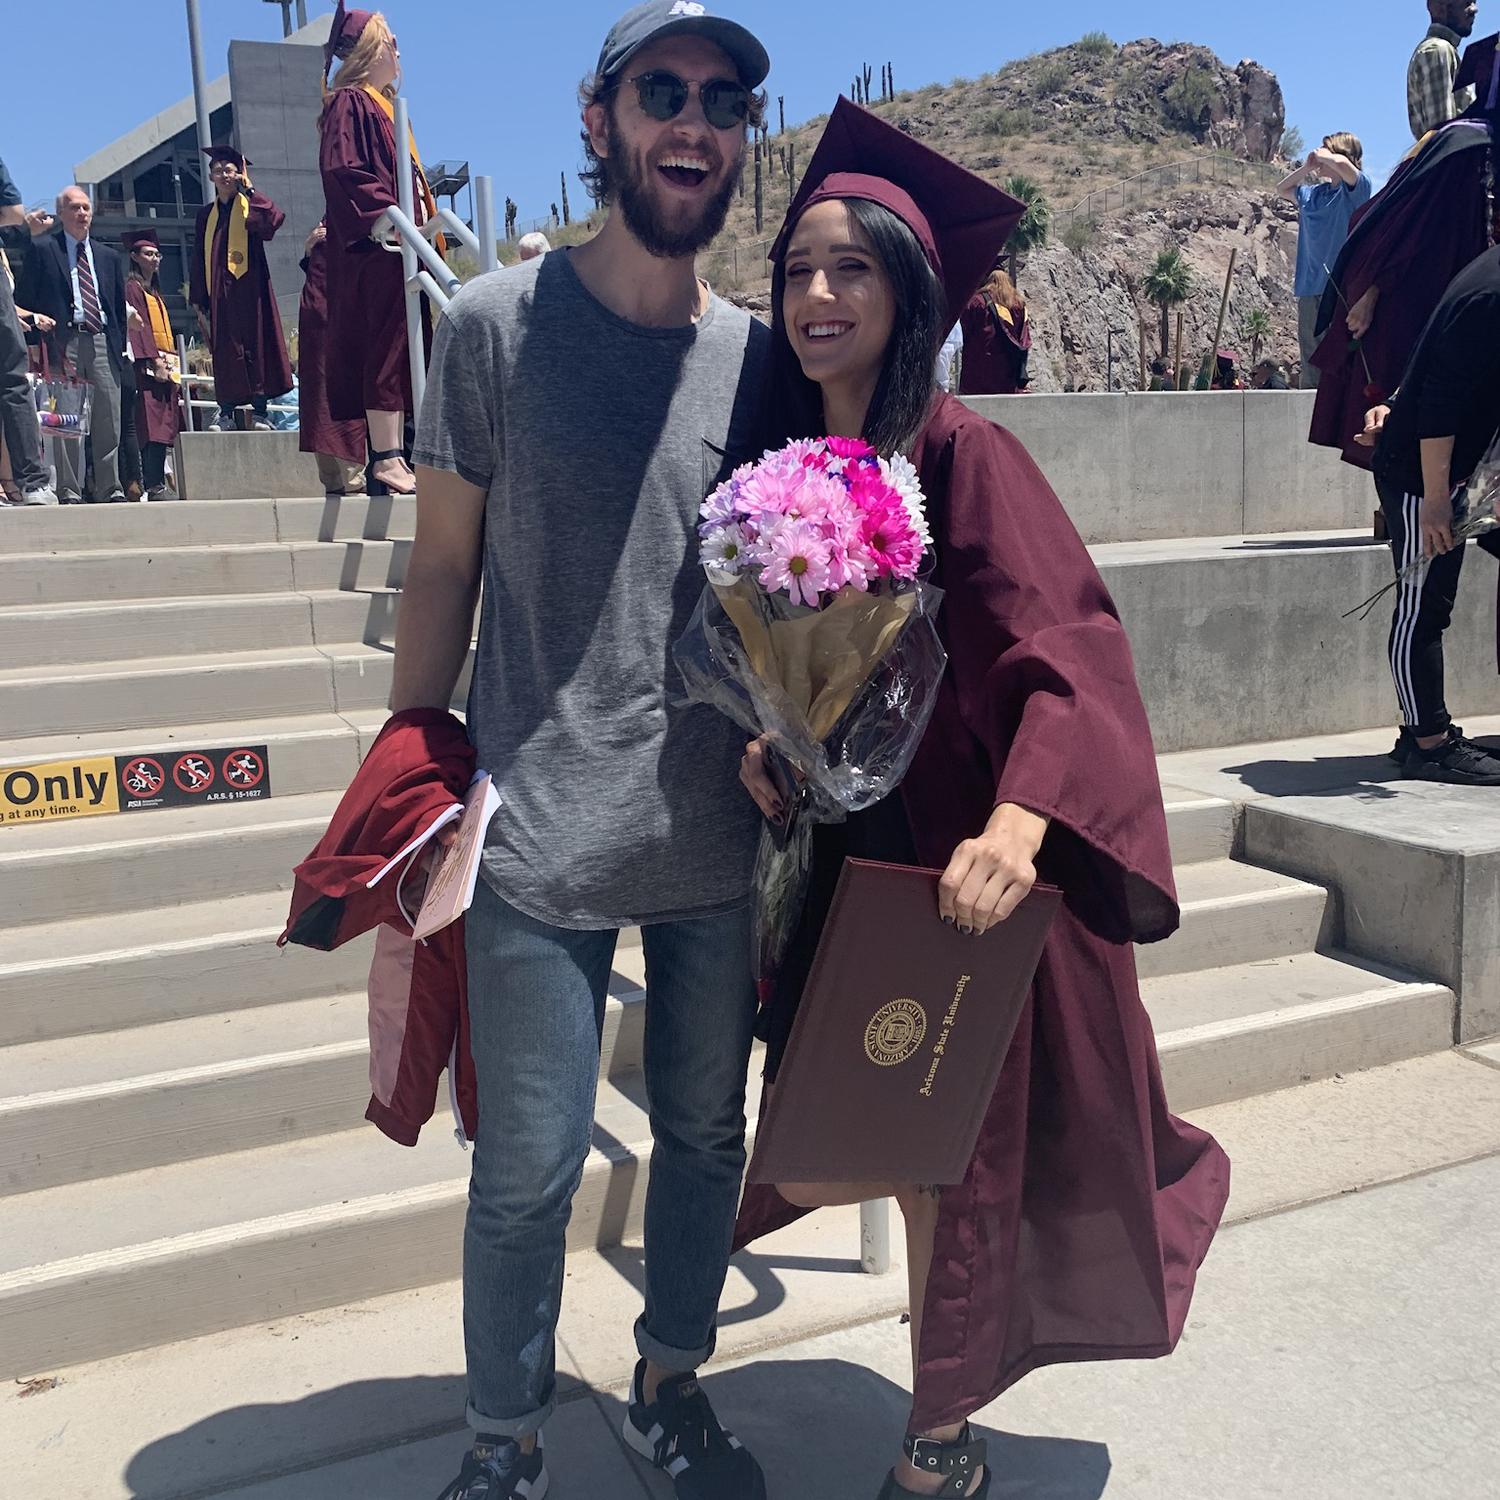 Jordan’s Graduation from ASU
May 2019